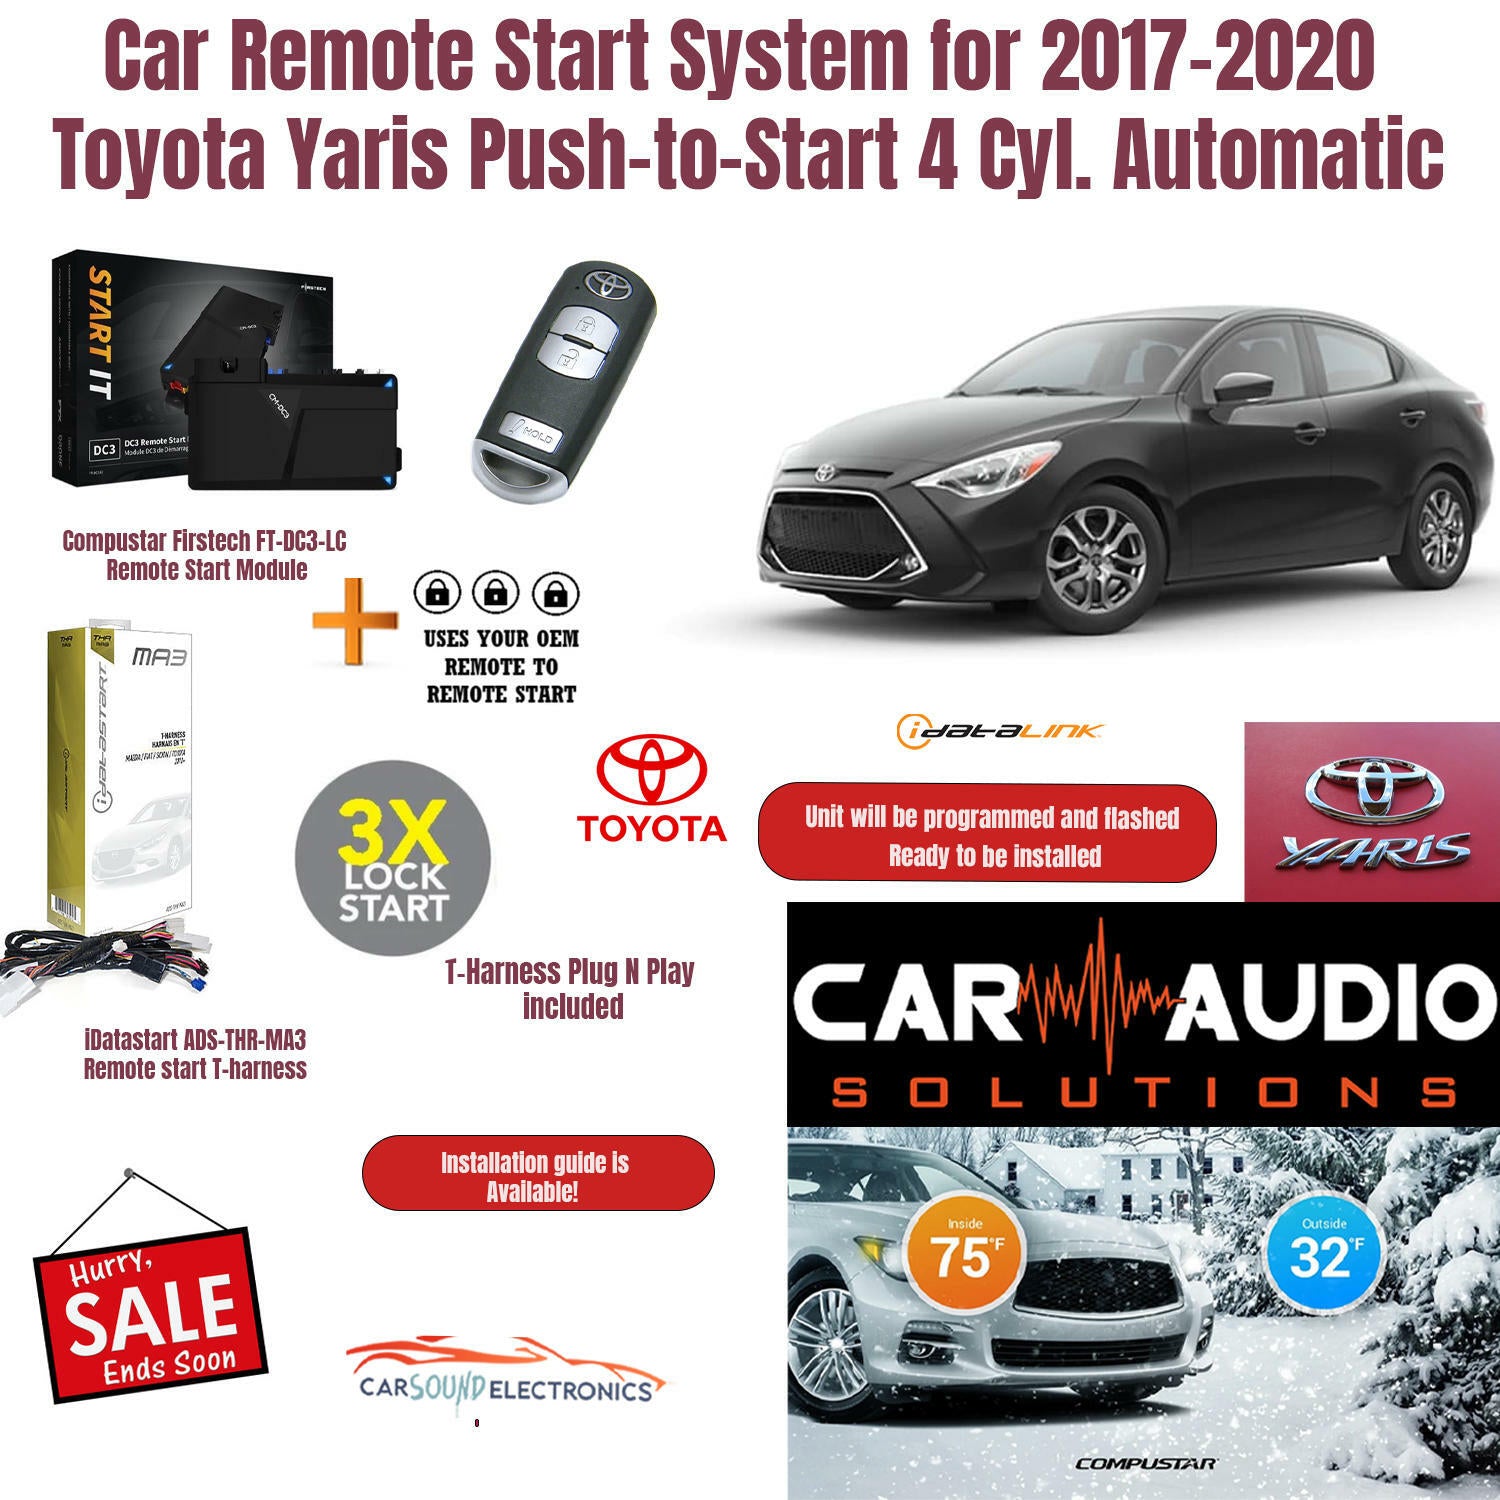 Car Remote Start System for 2017-2020 Toyota Yaris Push-to-Start 4